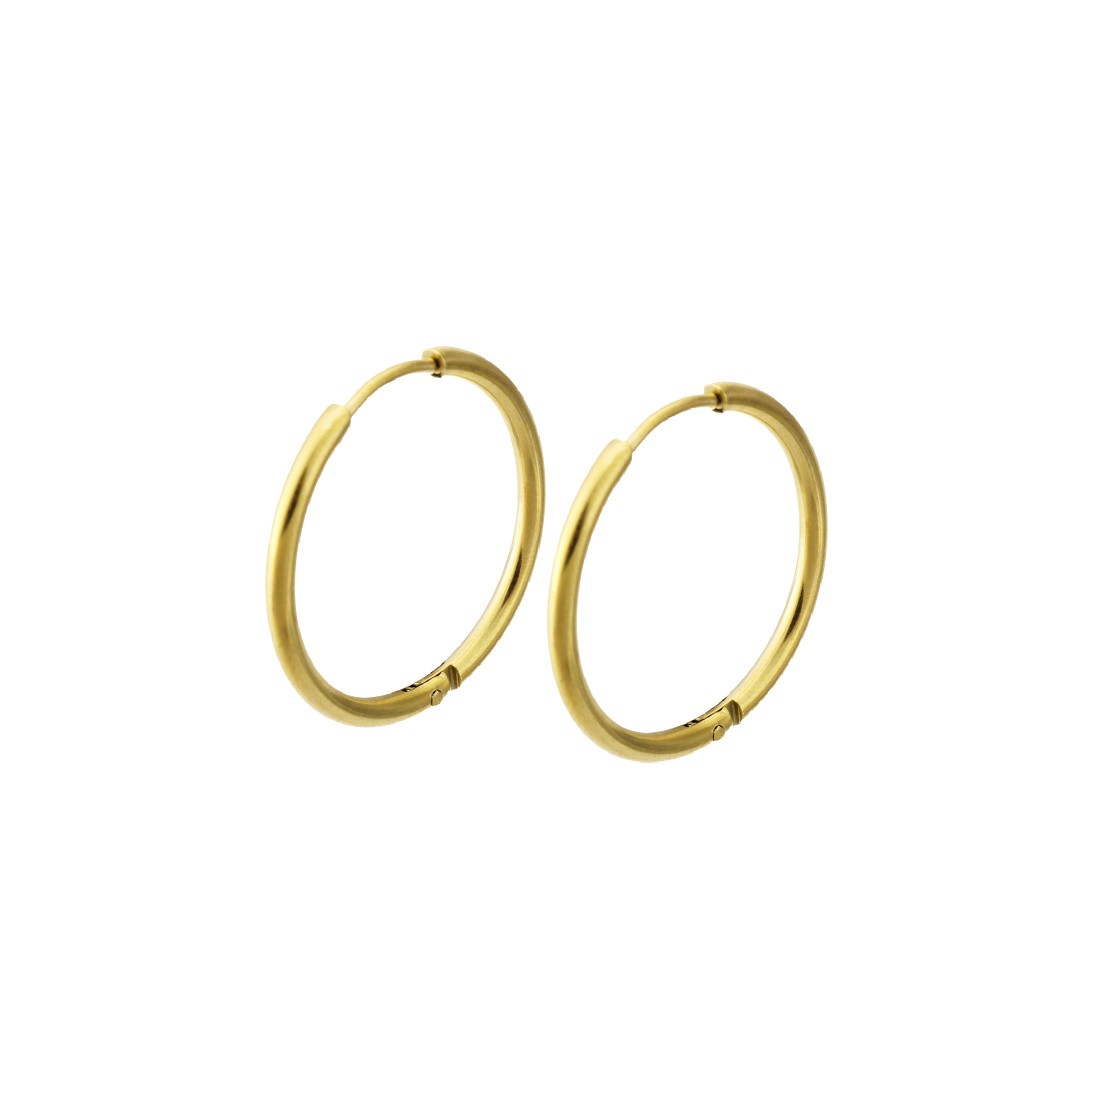 Hoop earrings / surgical steel / 20mm / gold-plated / 2pcs BKSCH46KG